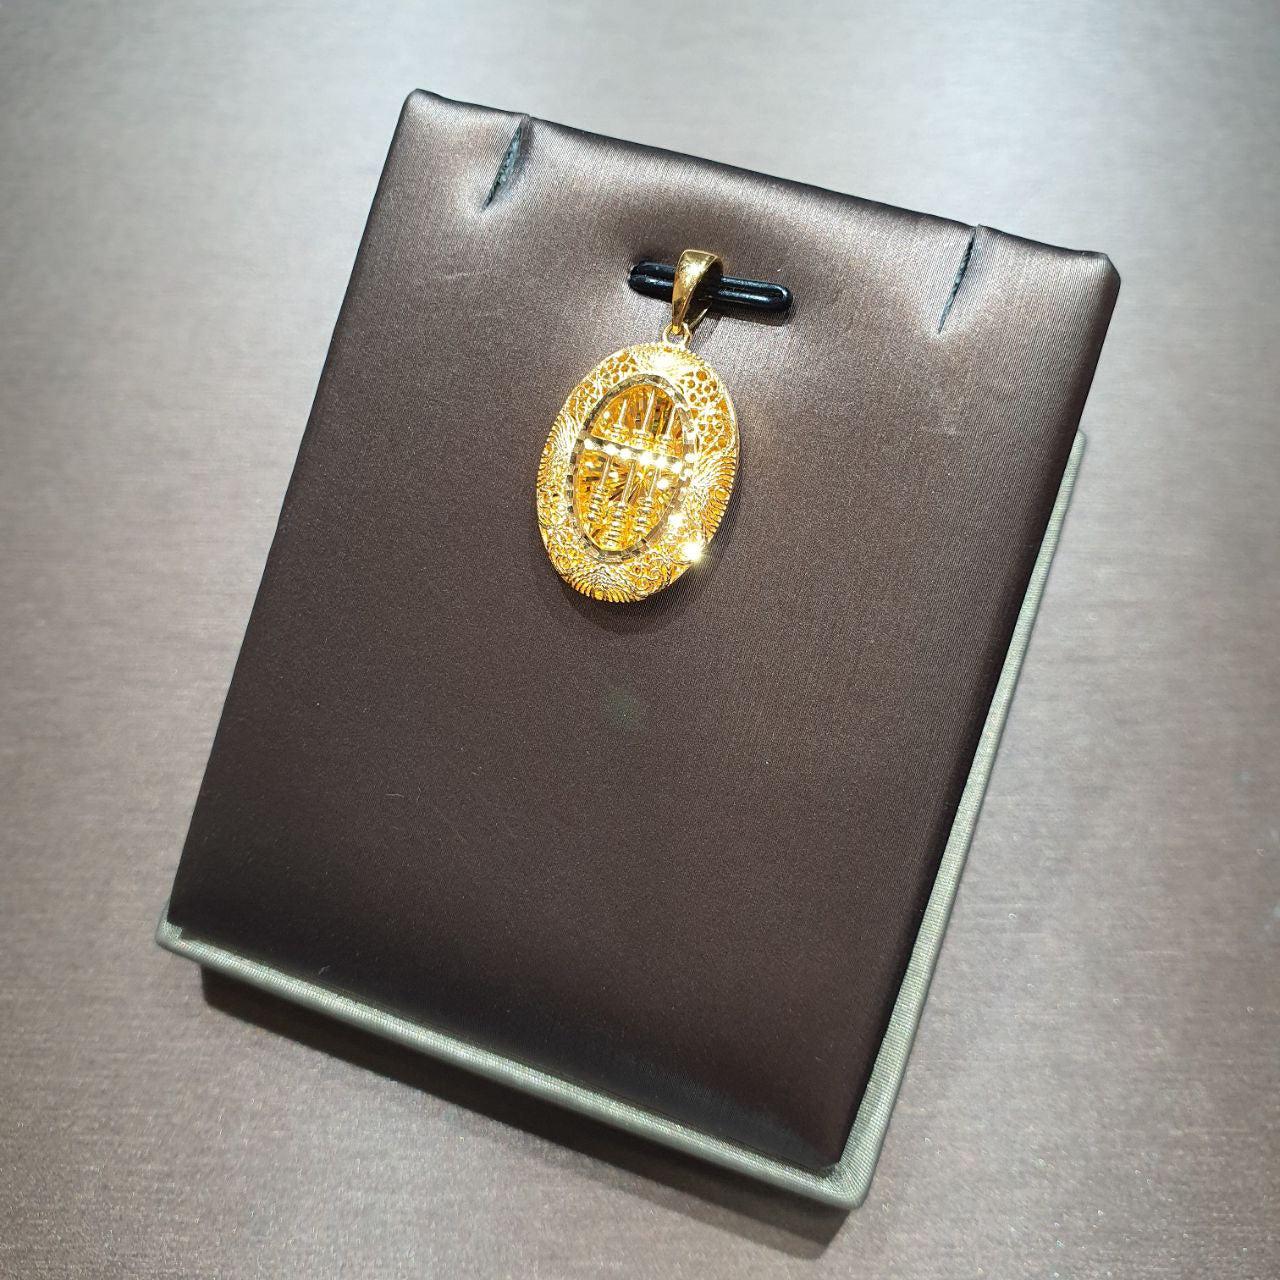 22k / 916 Gold Oval Abacus Pendant-Charms & Pendants-Best Gold Shop